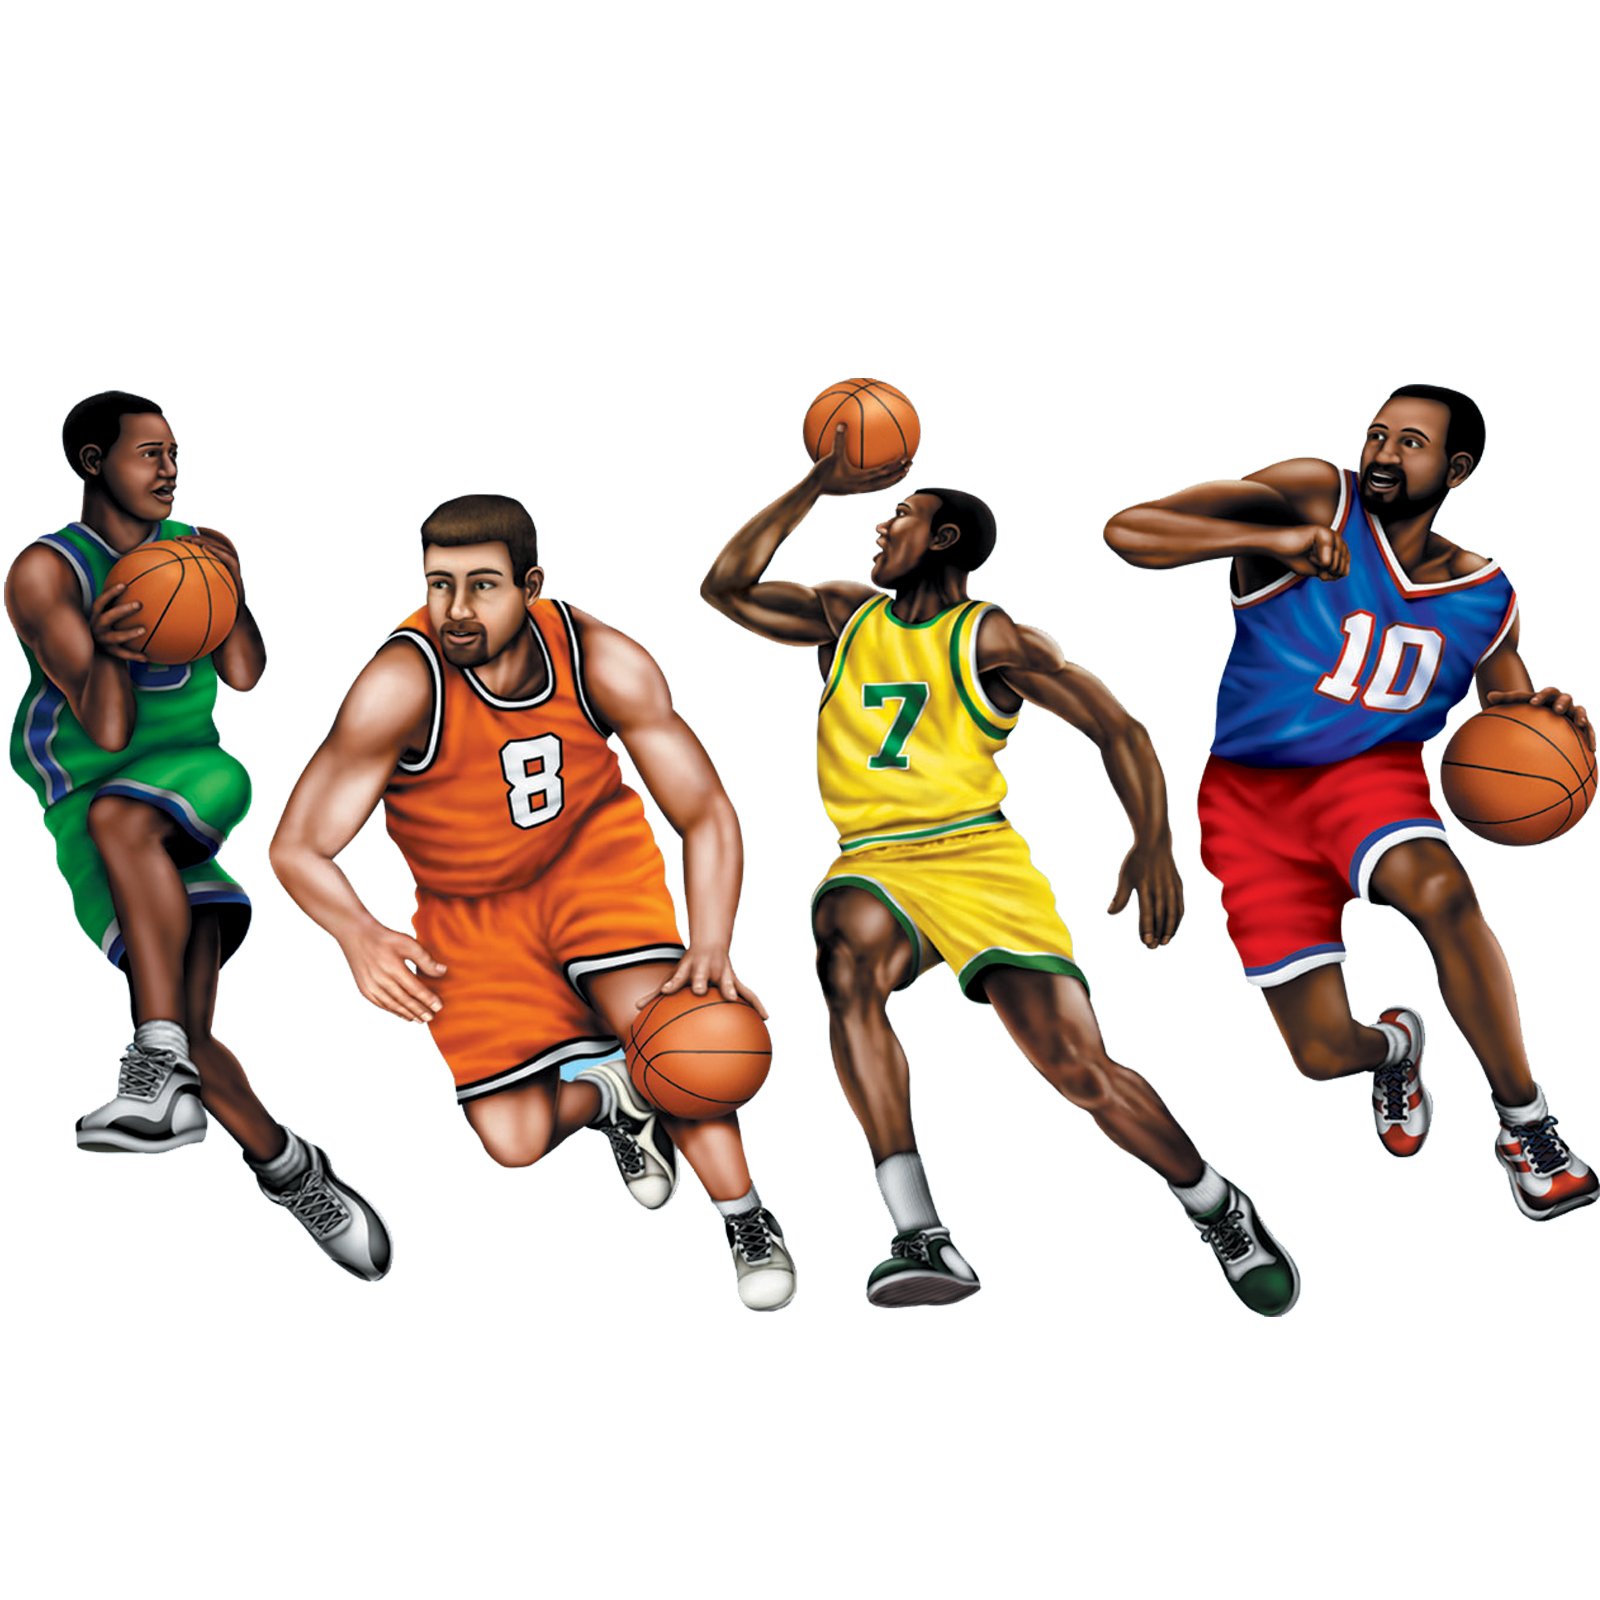 Cartoon Basketball Players - Cliparts.co